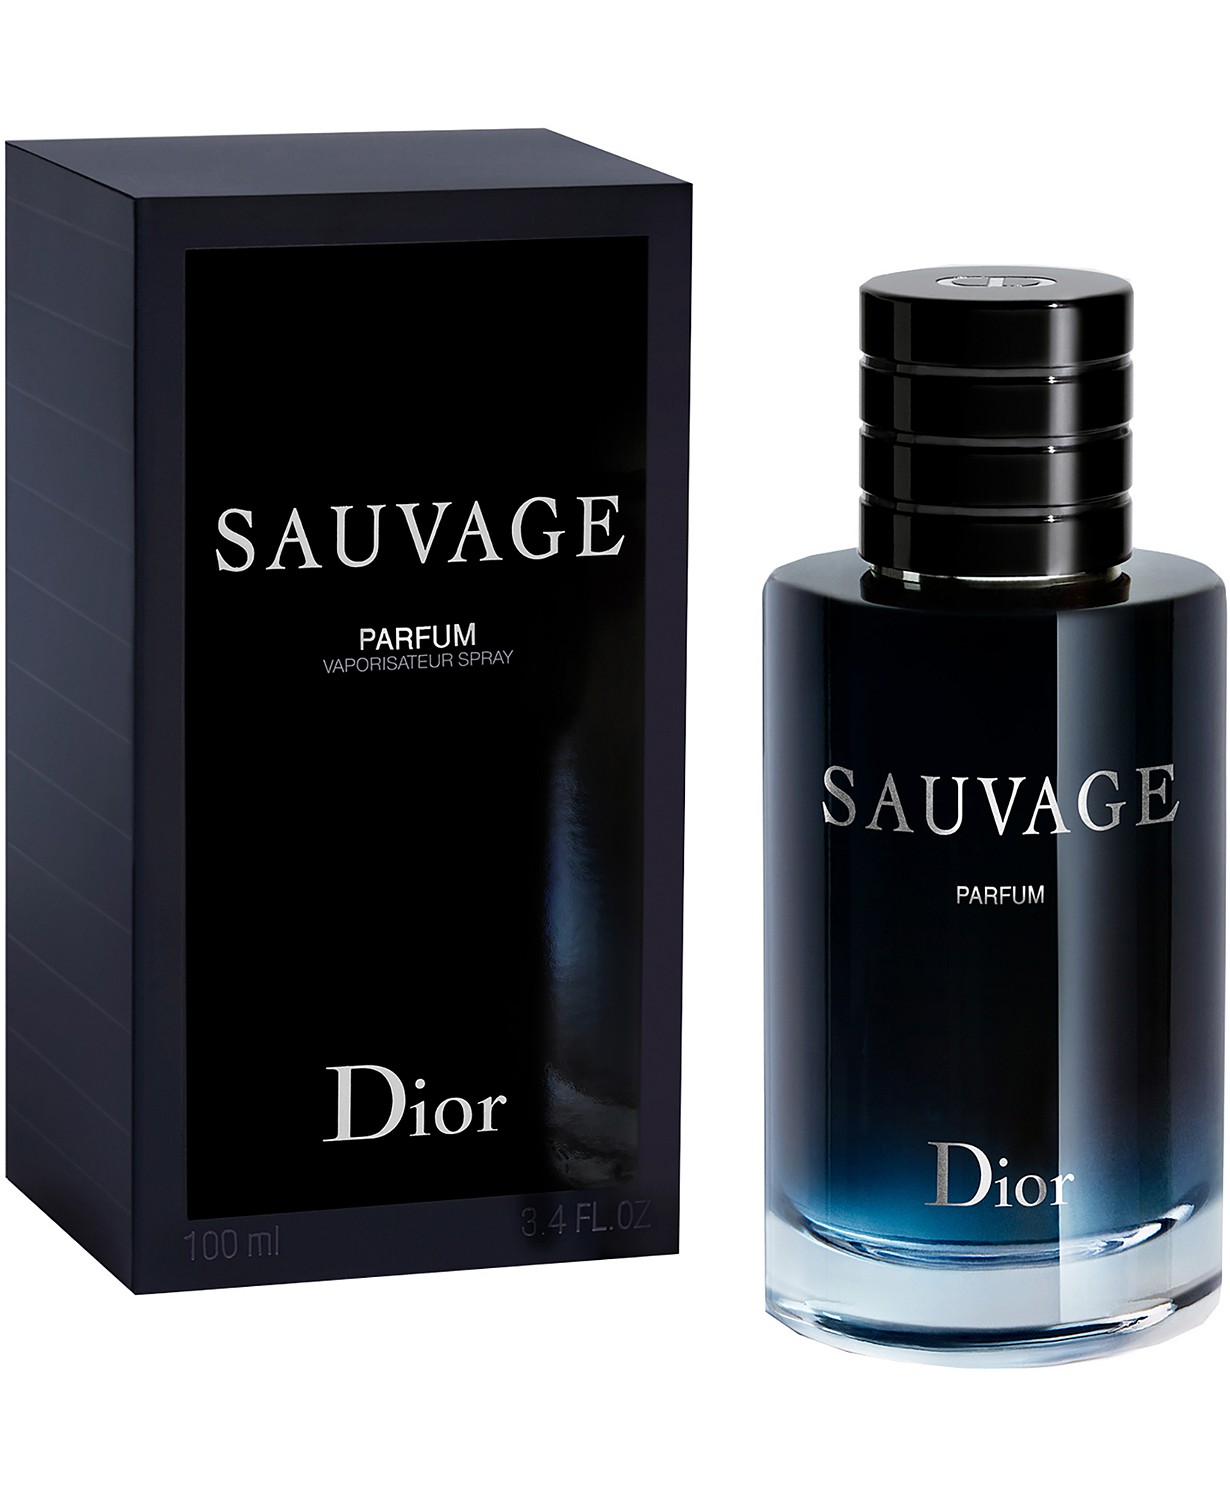 Eau Sauvage Extreme Intense Eau de Toilette Spray 3.4 oz by Christian Dior